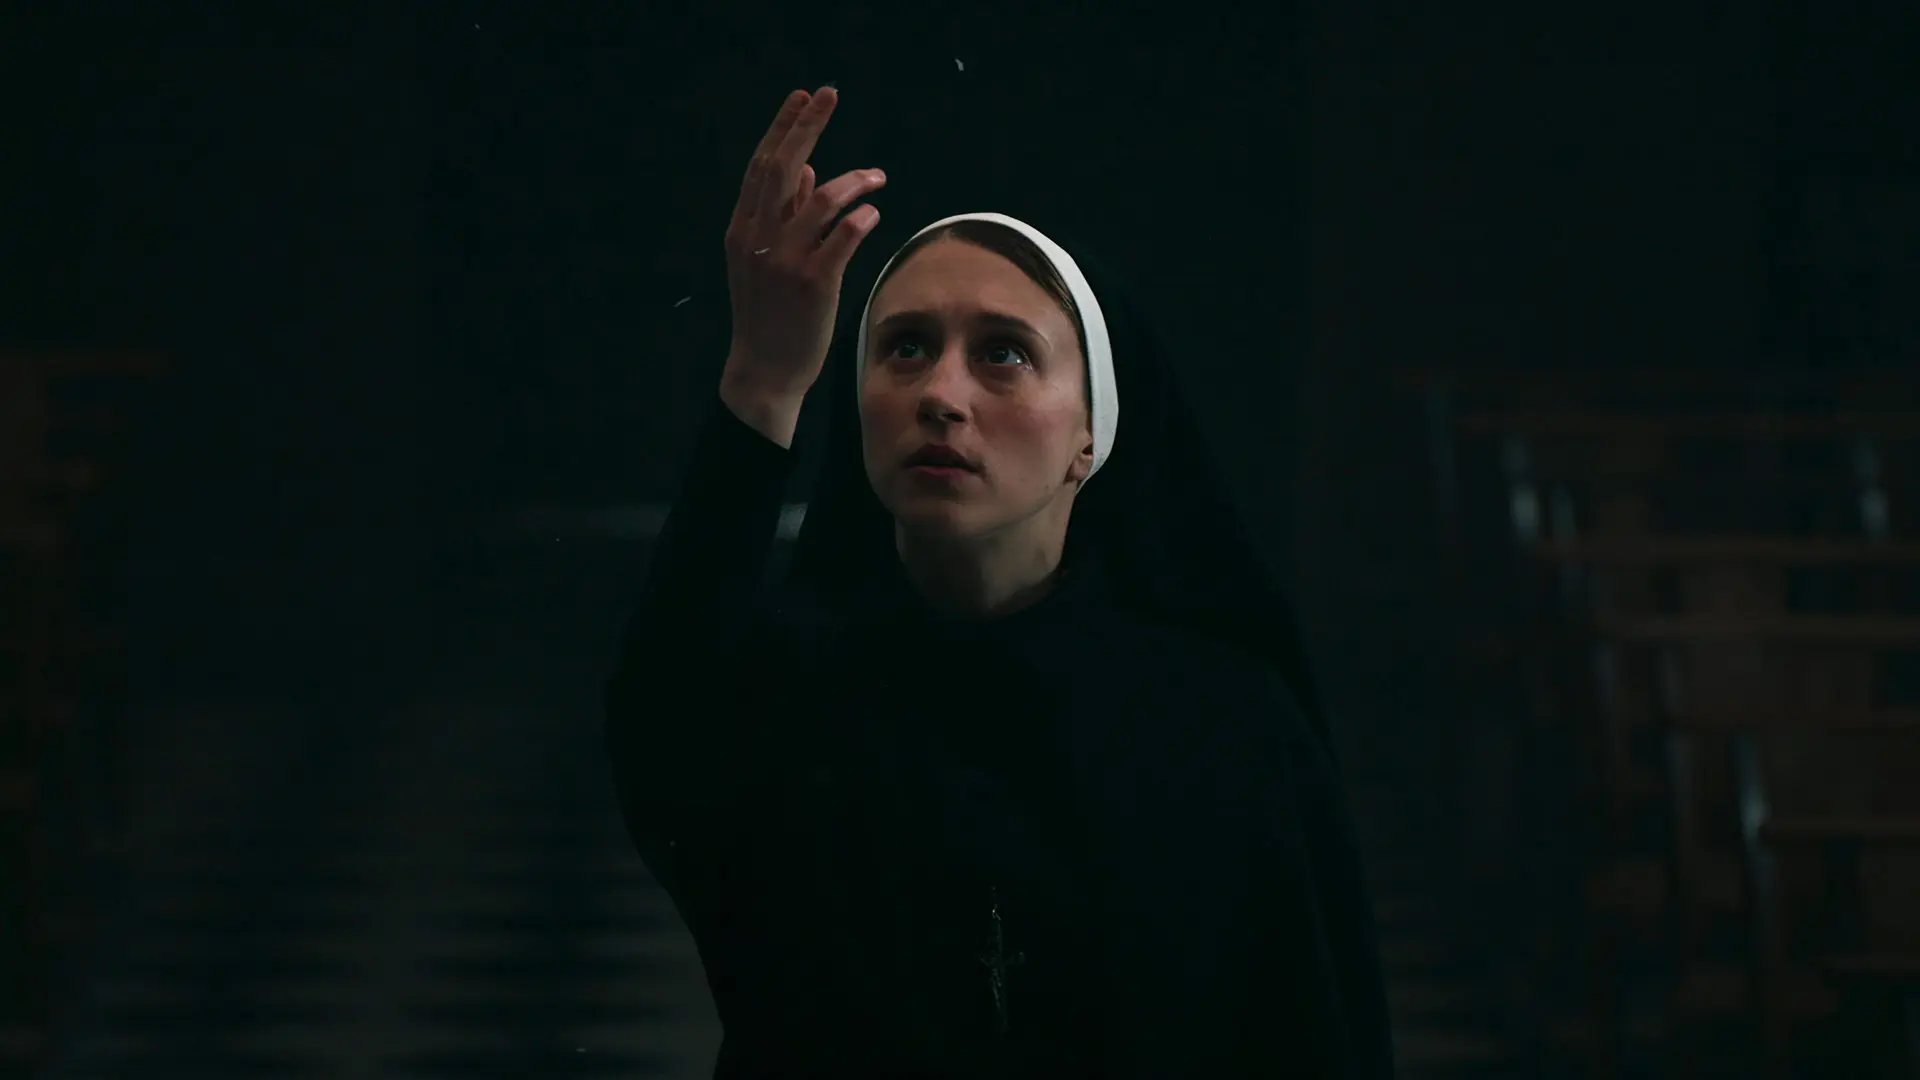 منتشر شدن اولین تریلر رسمی فیلم The Nun II!